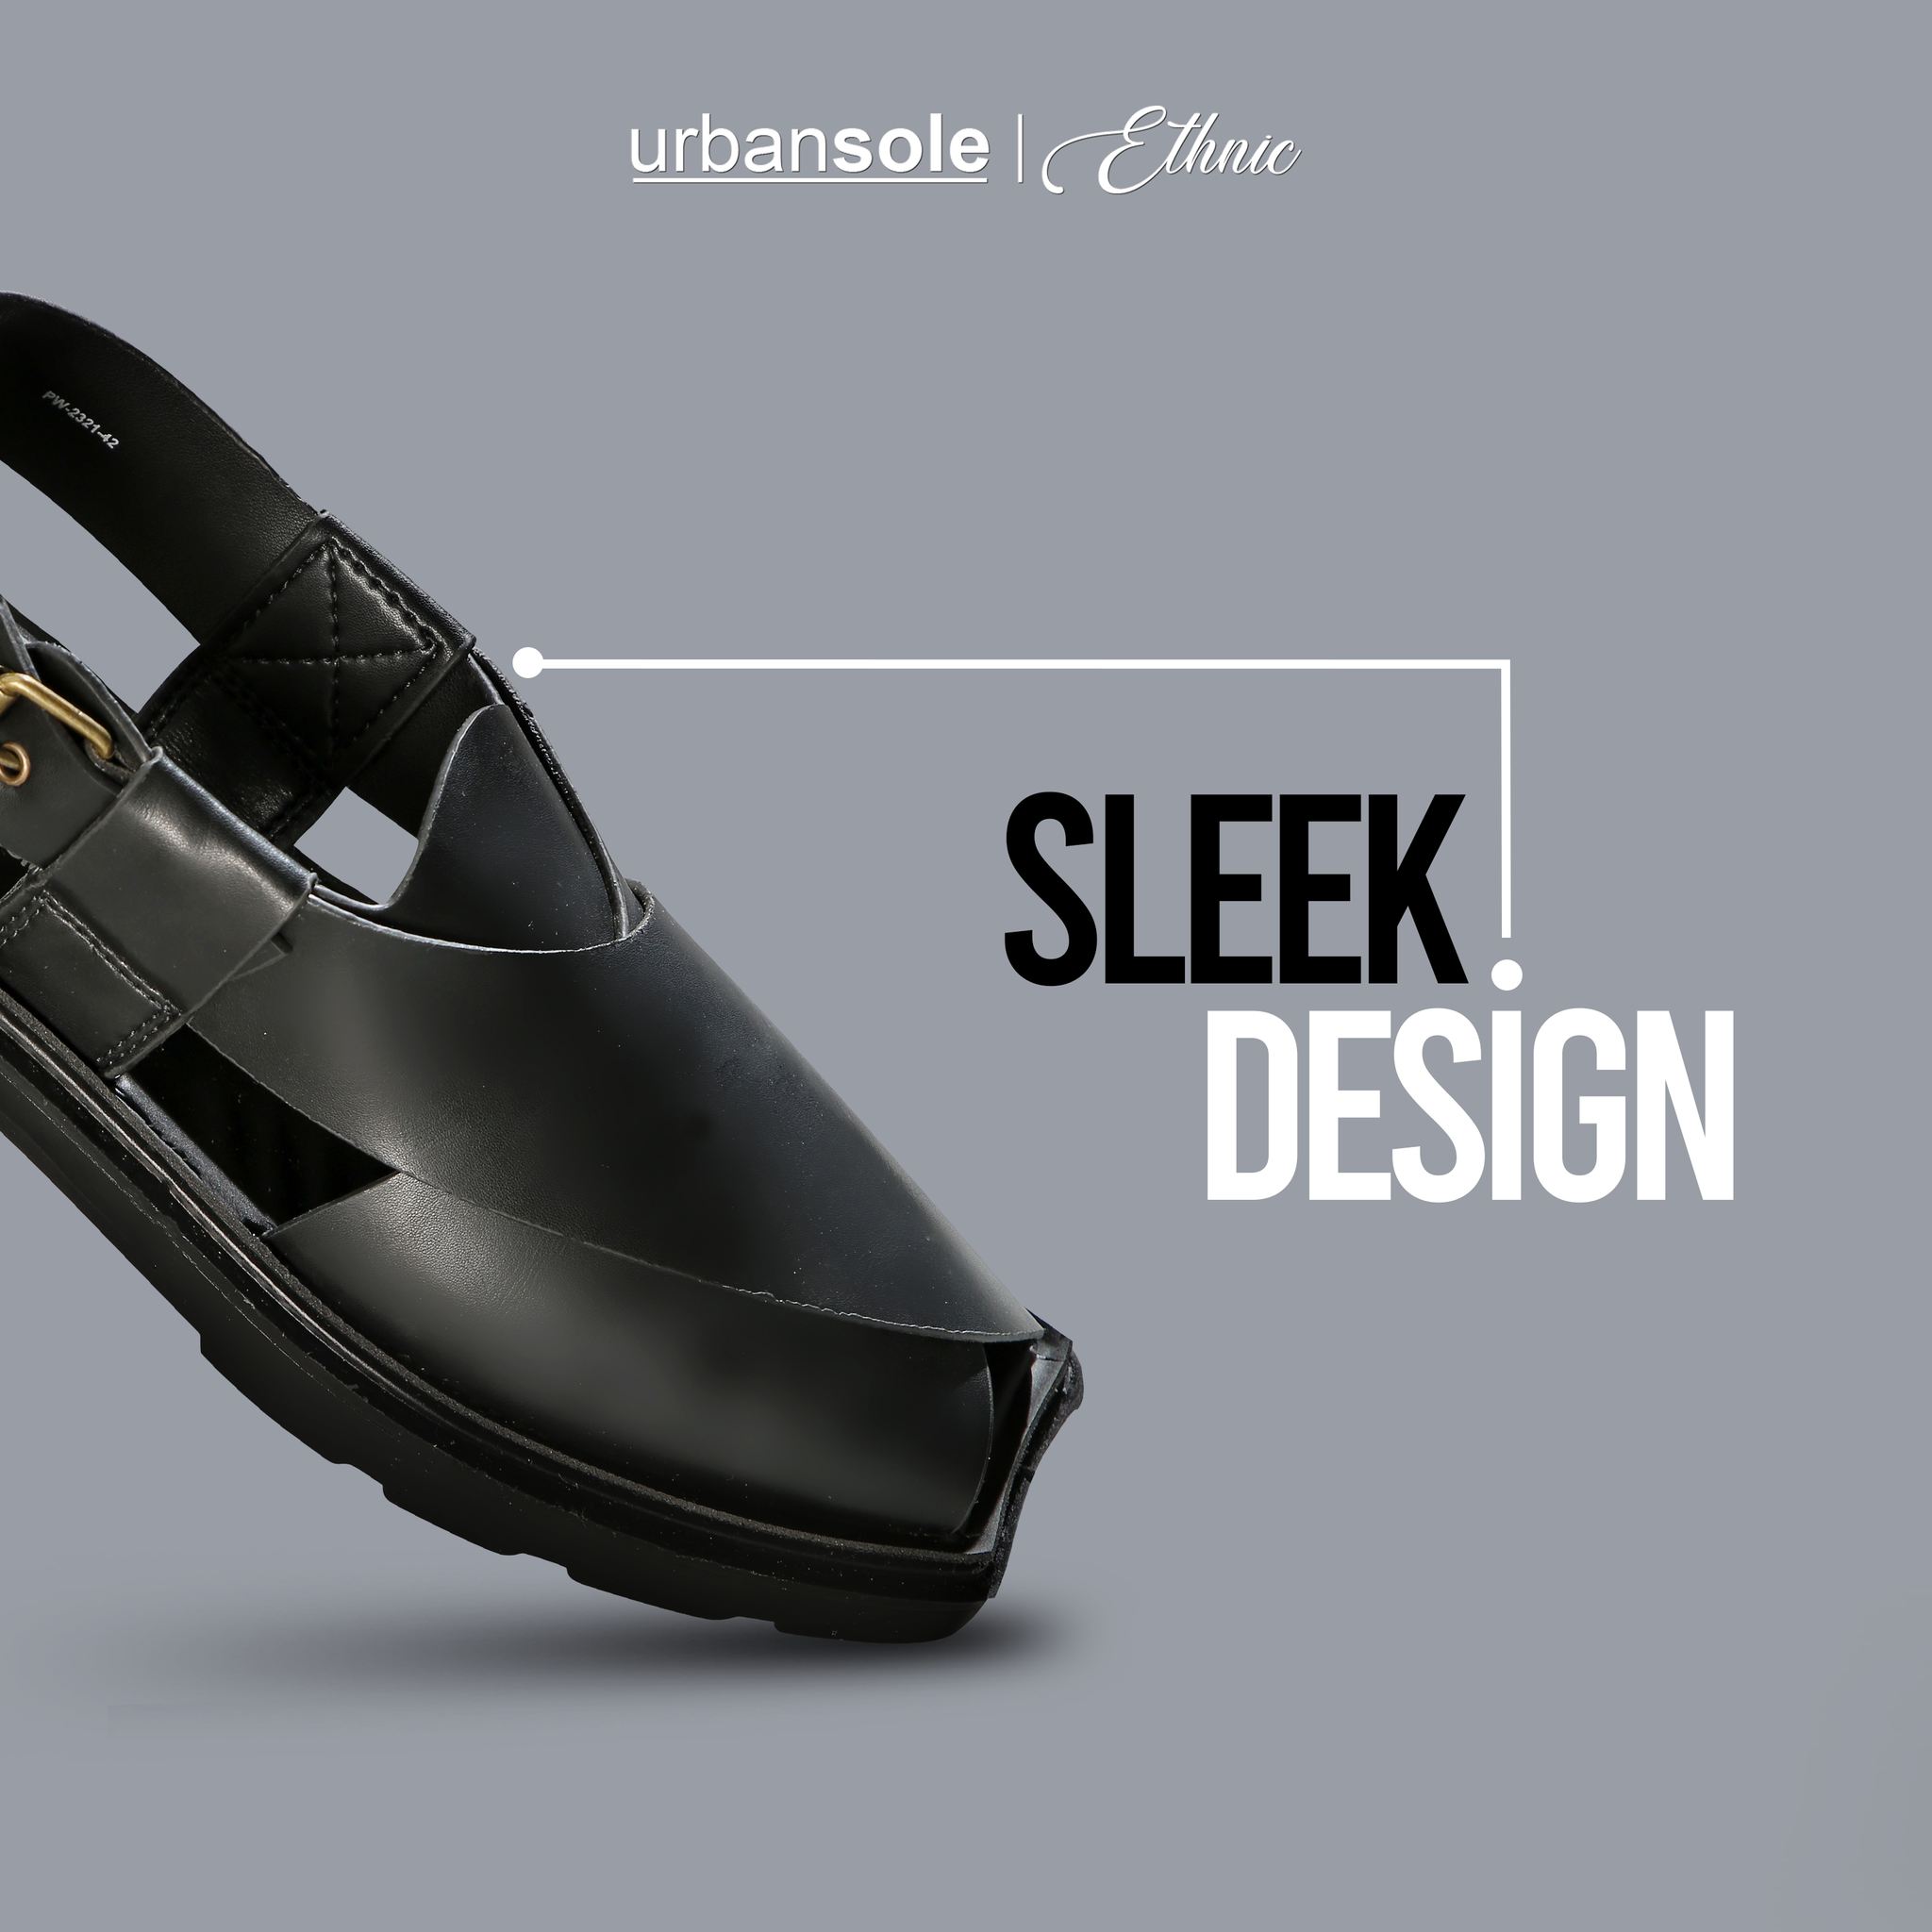 Urbansole shoes